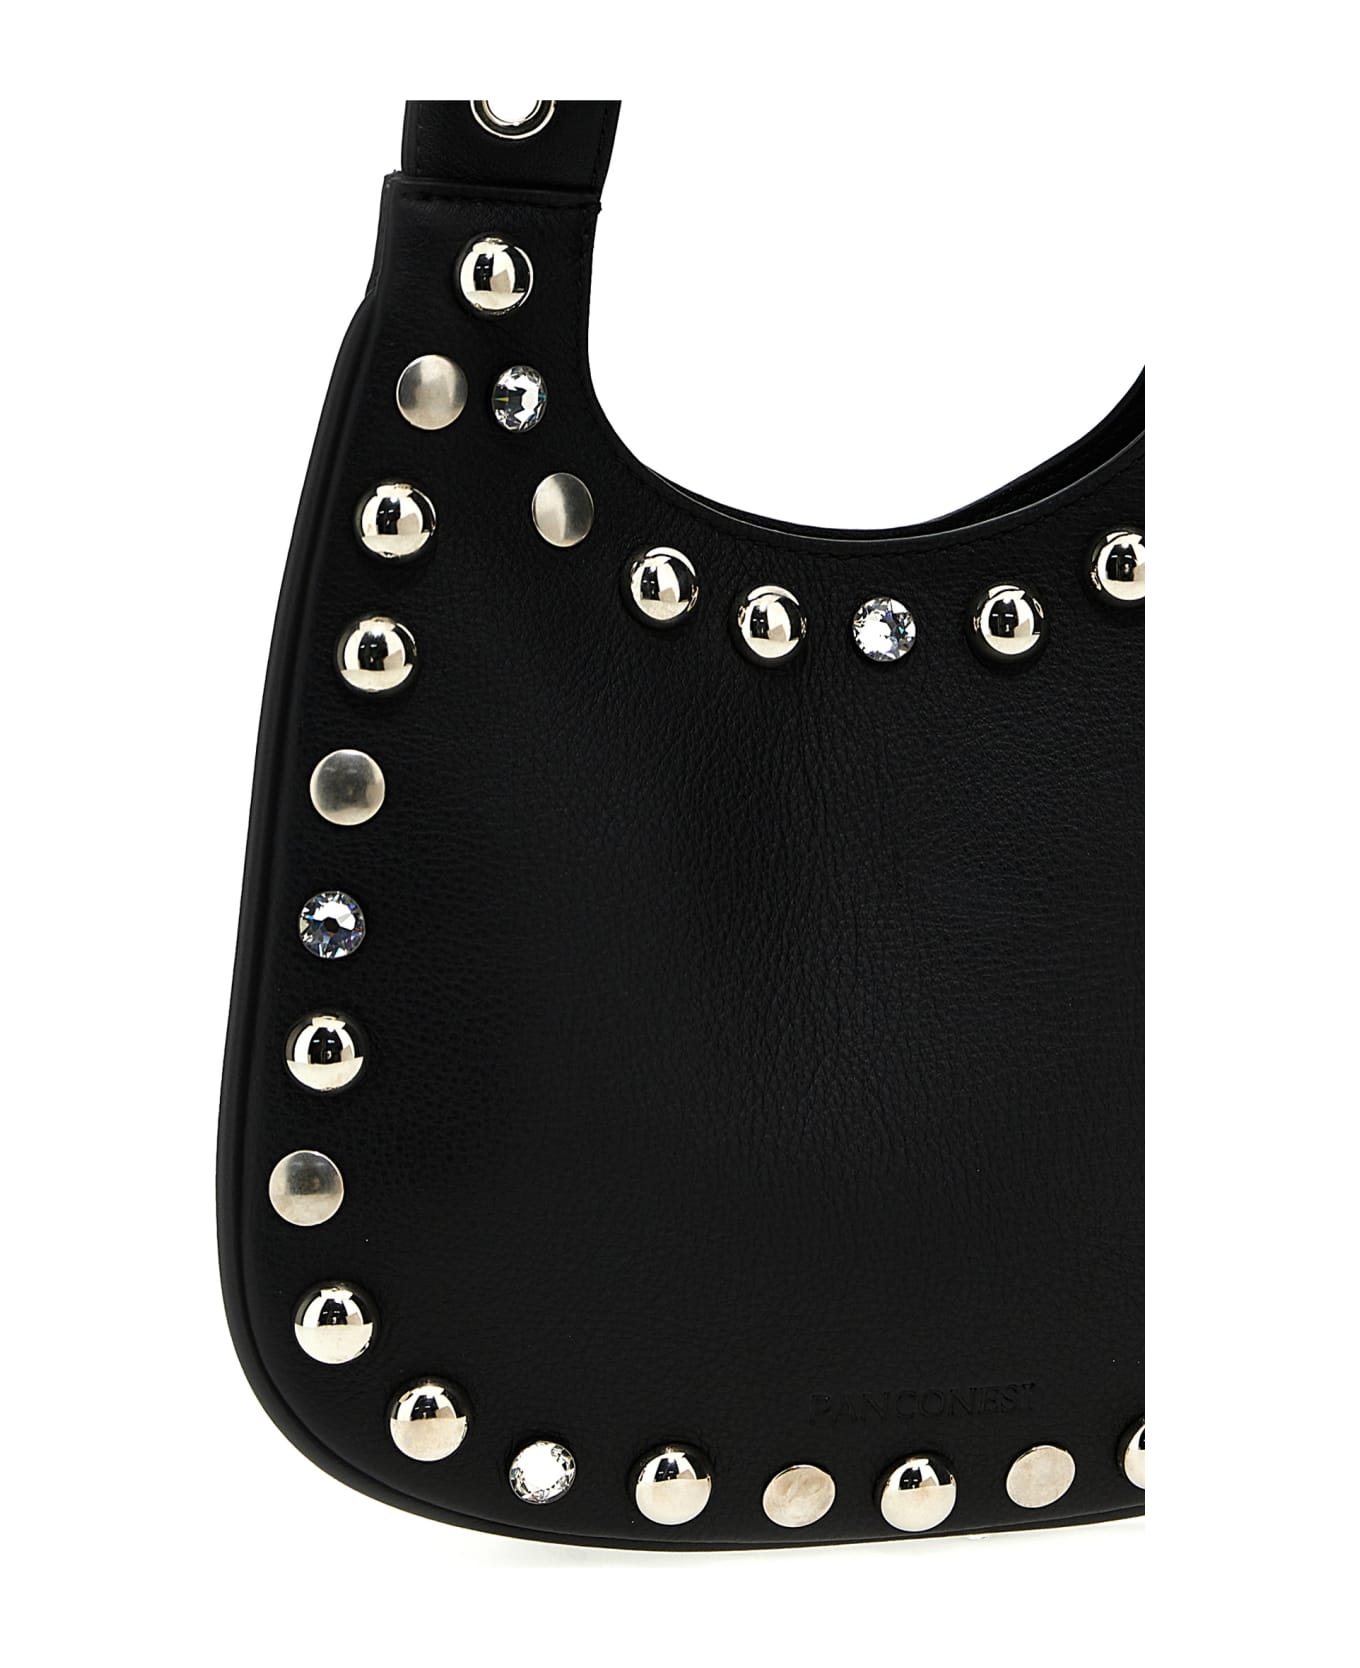 Panconesi 'diamanti Saddle Bag S' Handbag - Black  